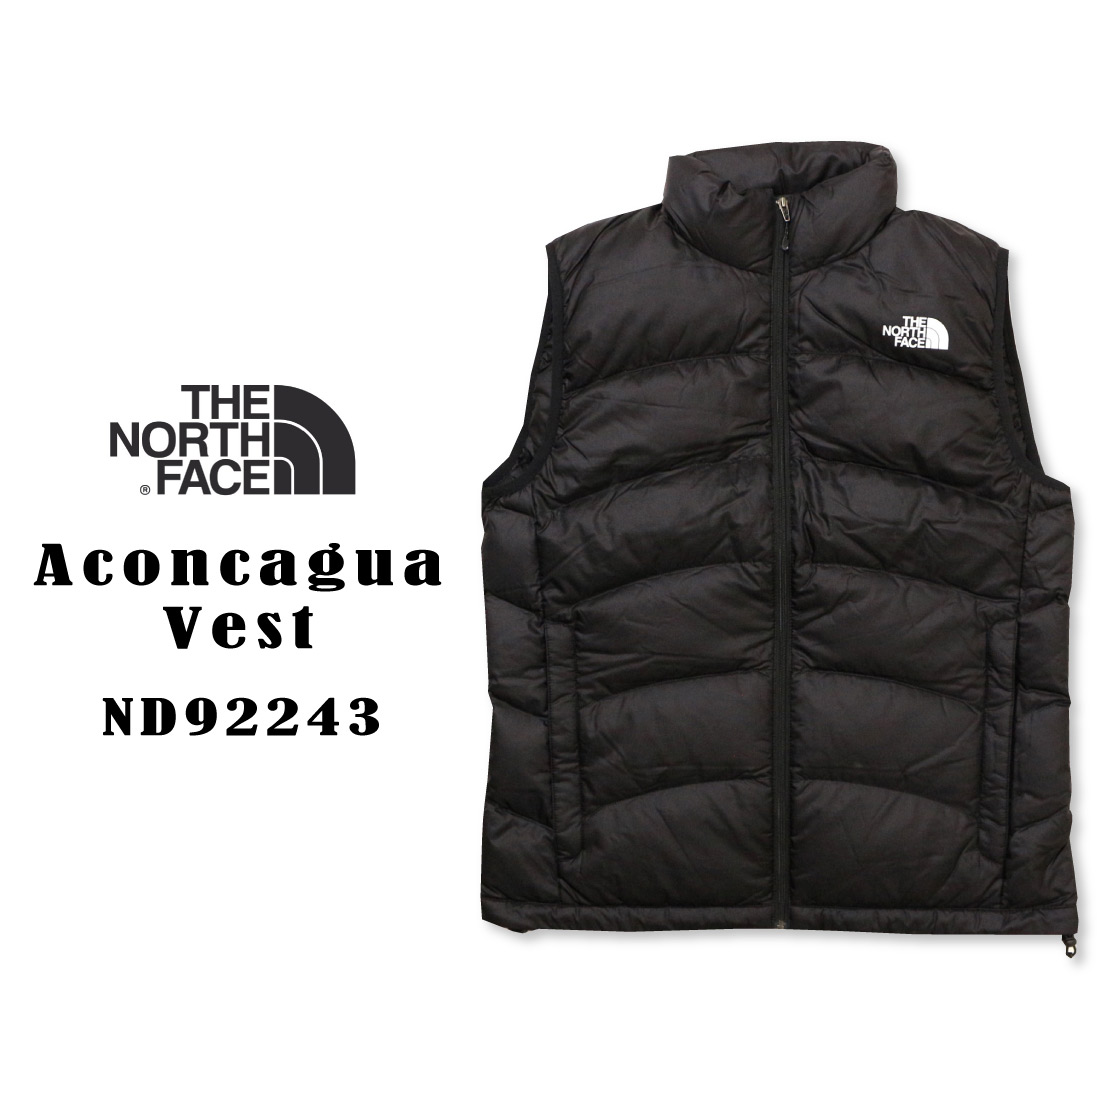 HE NORTH FACE ザ ノースフェイス ND92243 Aconcagua Vest